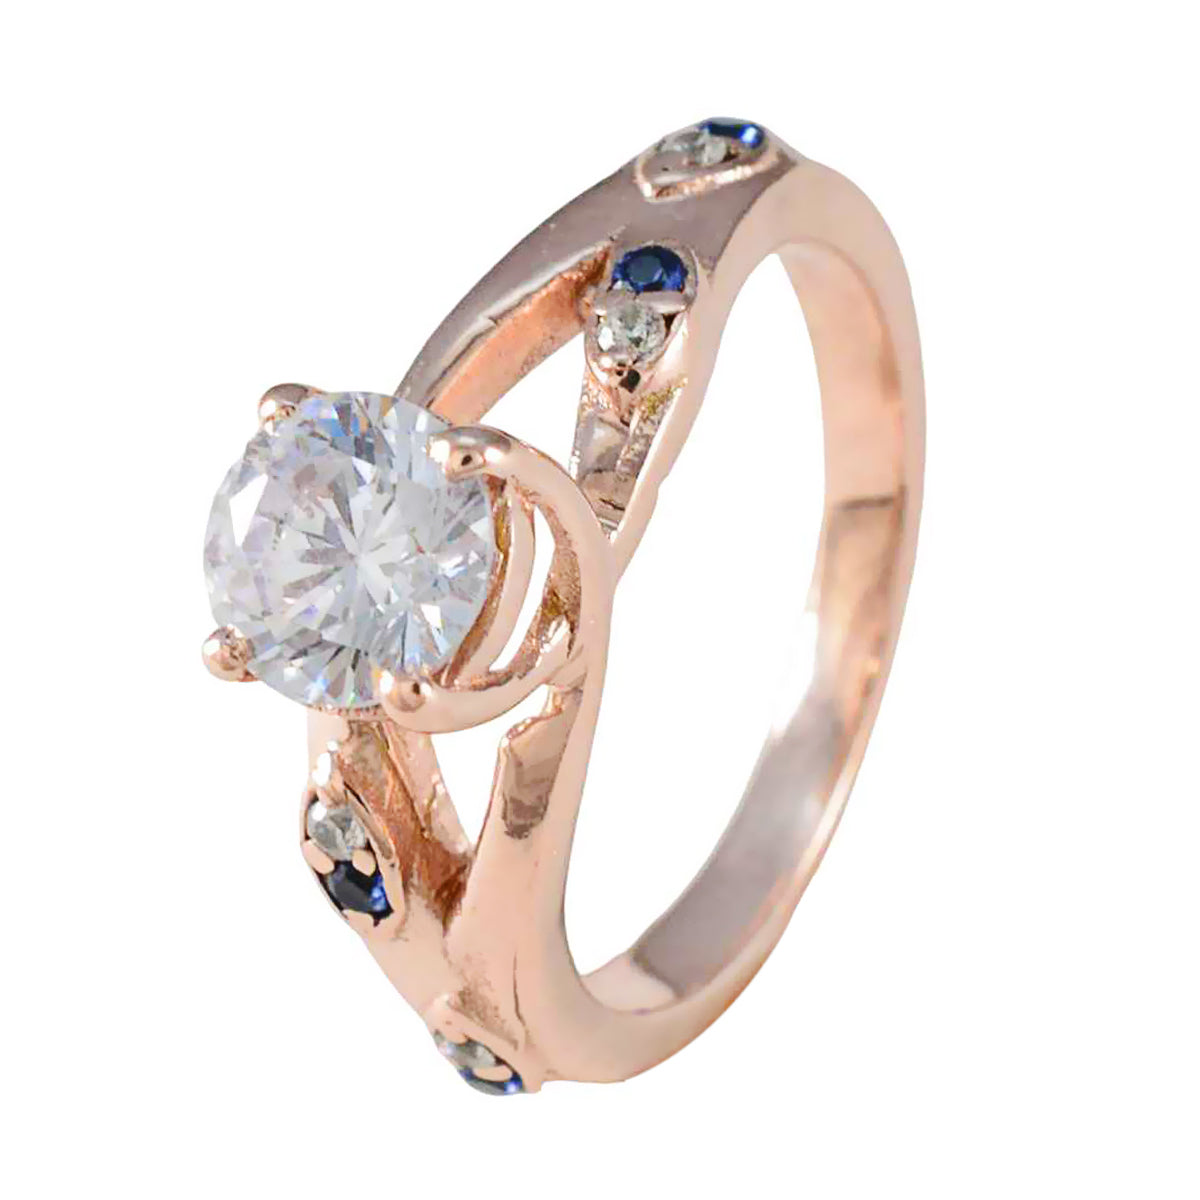 Anillo de plata antiguo riyo con chapado en oro rosa, piedra de zafiro azul, ajuste de punta redonda, joyería de moda, anillo de cumpleaños